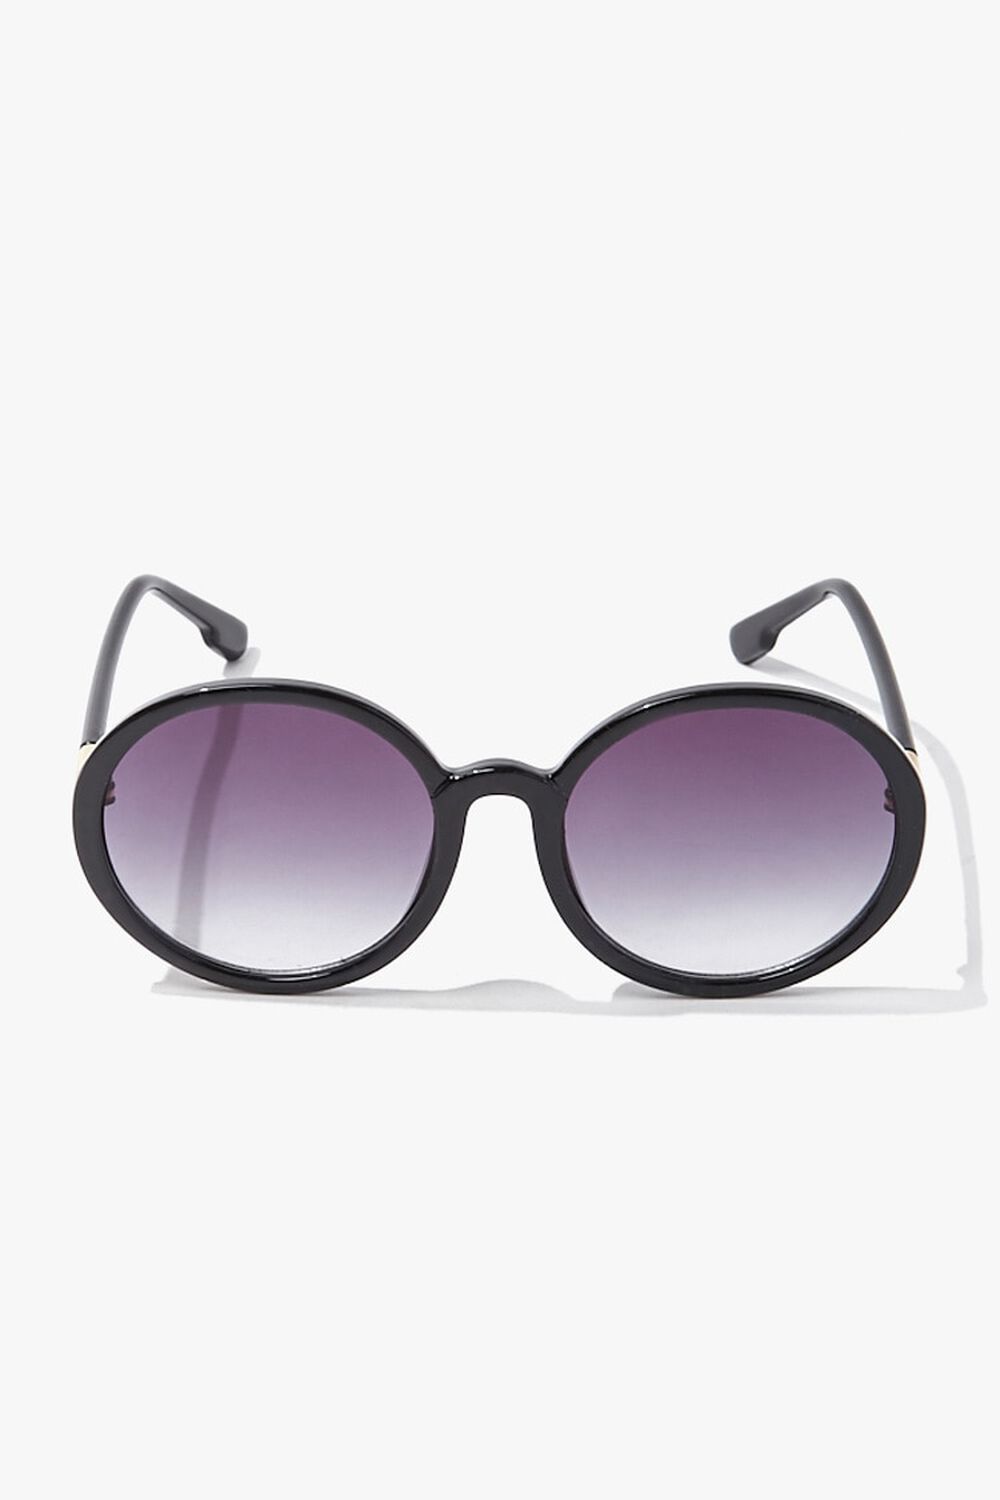 Round Tinted Sunglasses, image 1